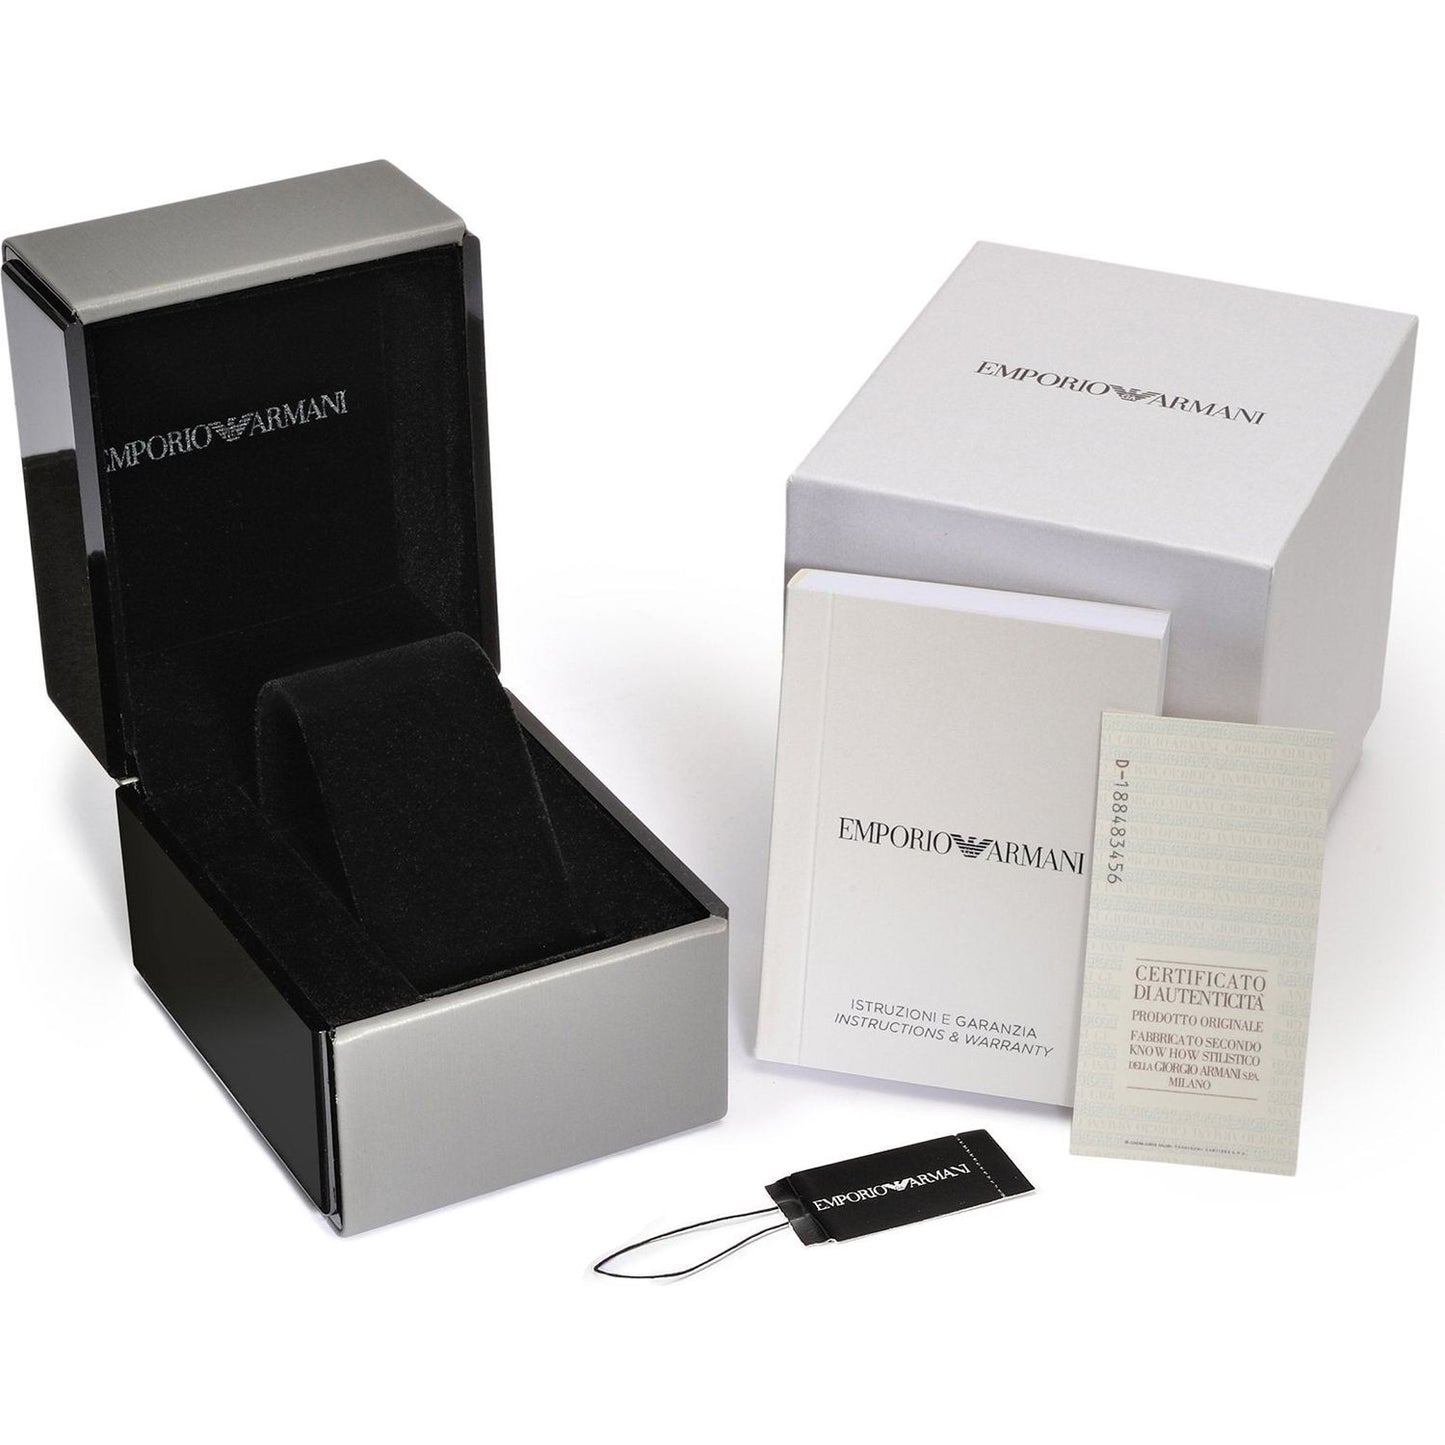 EMPORIO ARMANIEMPORIO ARMANI Mod. AR80007 Special Pack (watch + earrings)McRichard Designer Brands£199.00